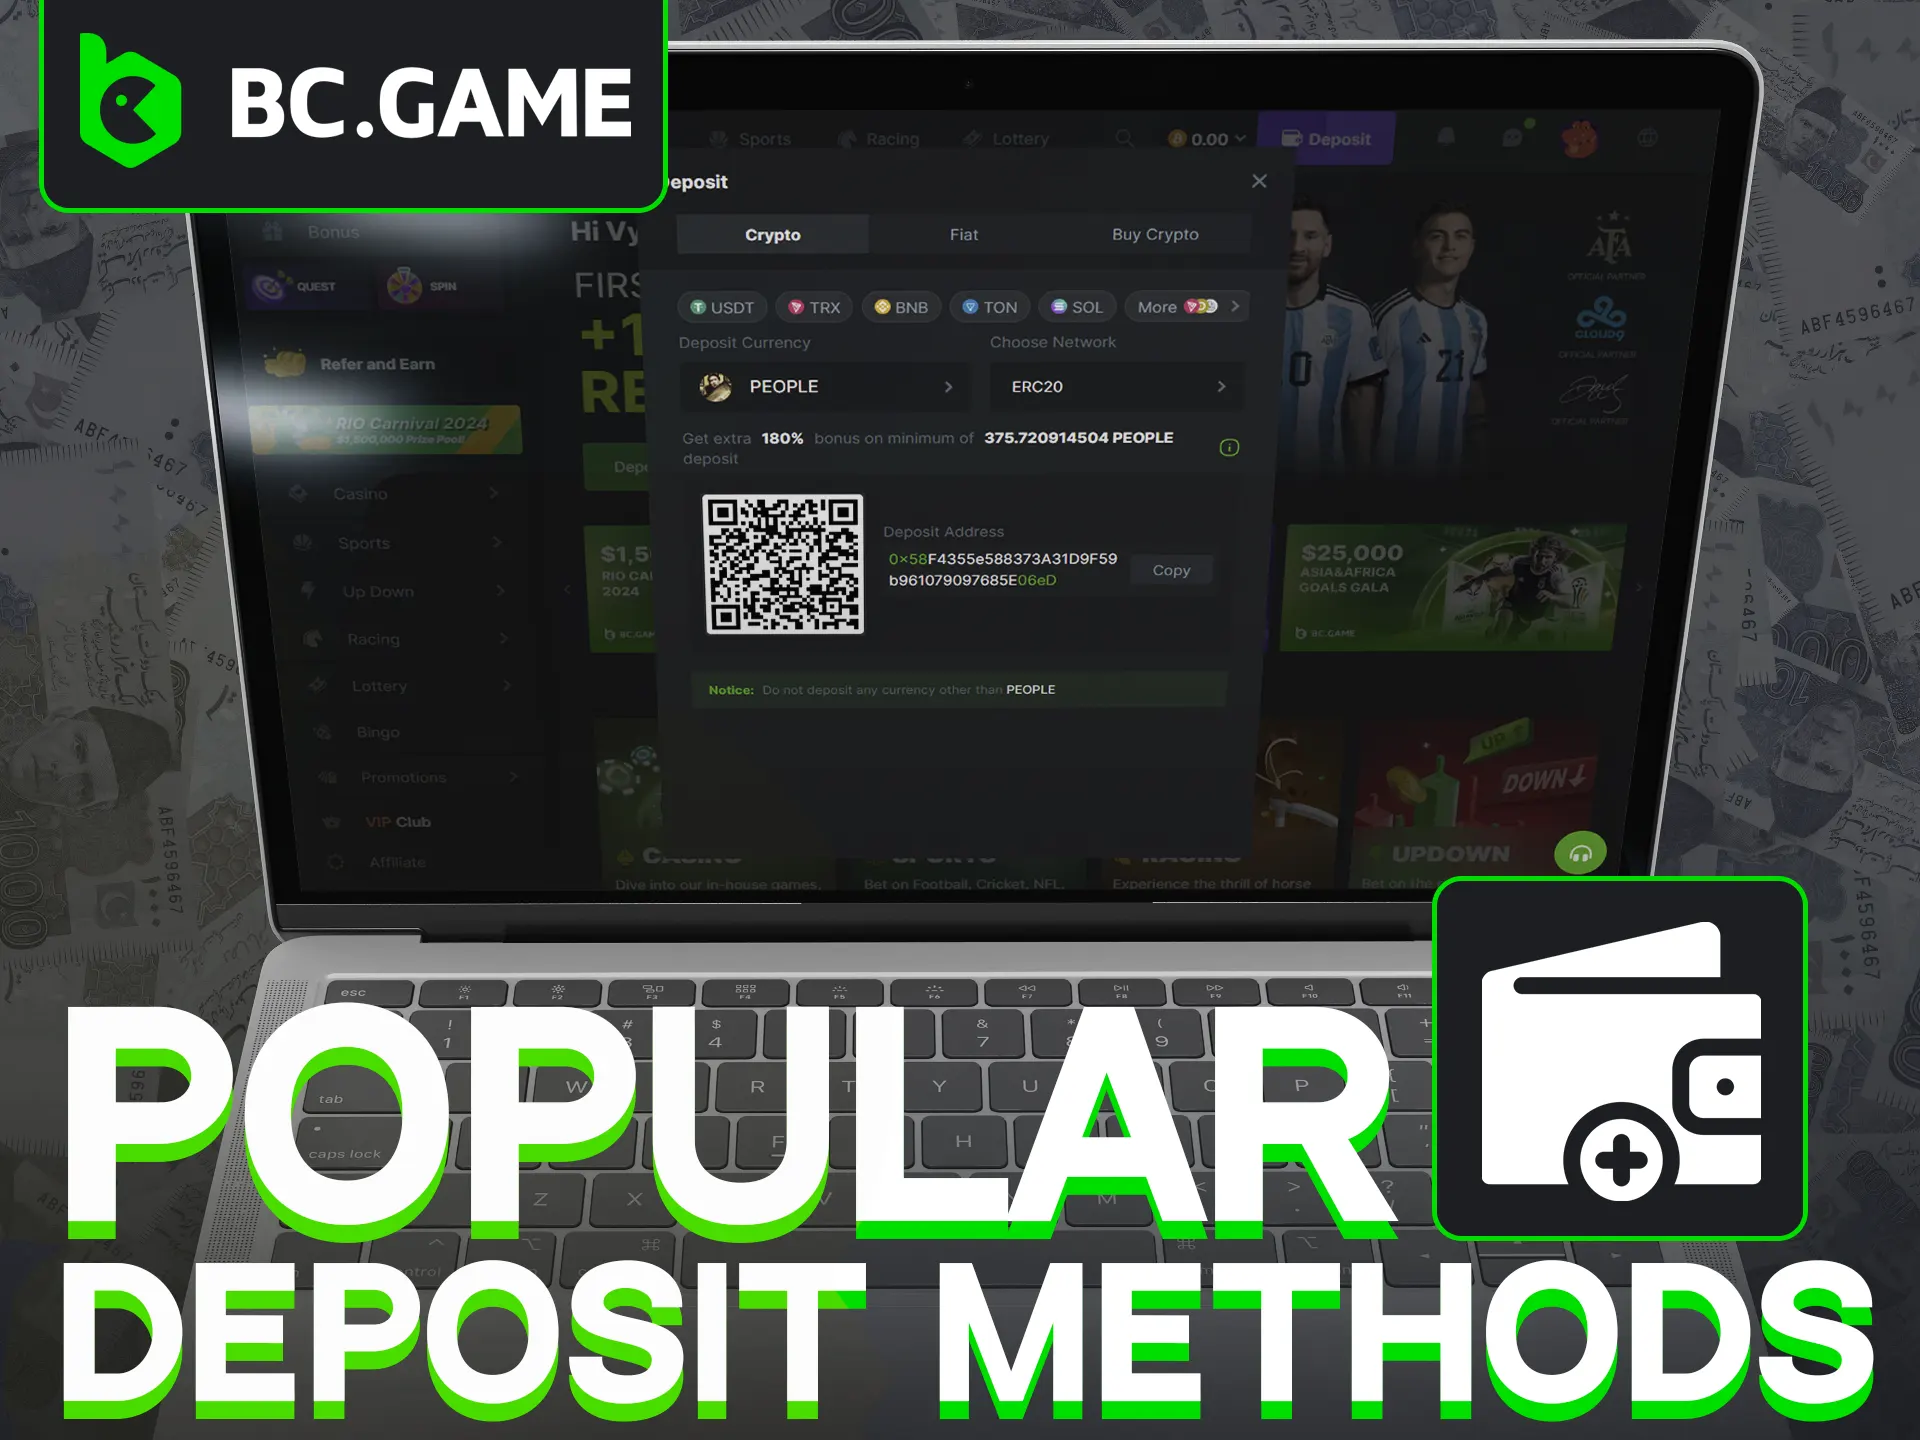 Top deposit methods in Pakistan for BC Game.